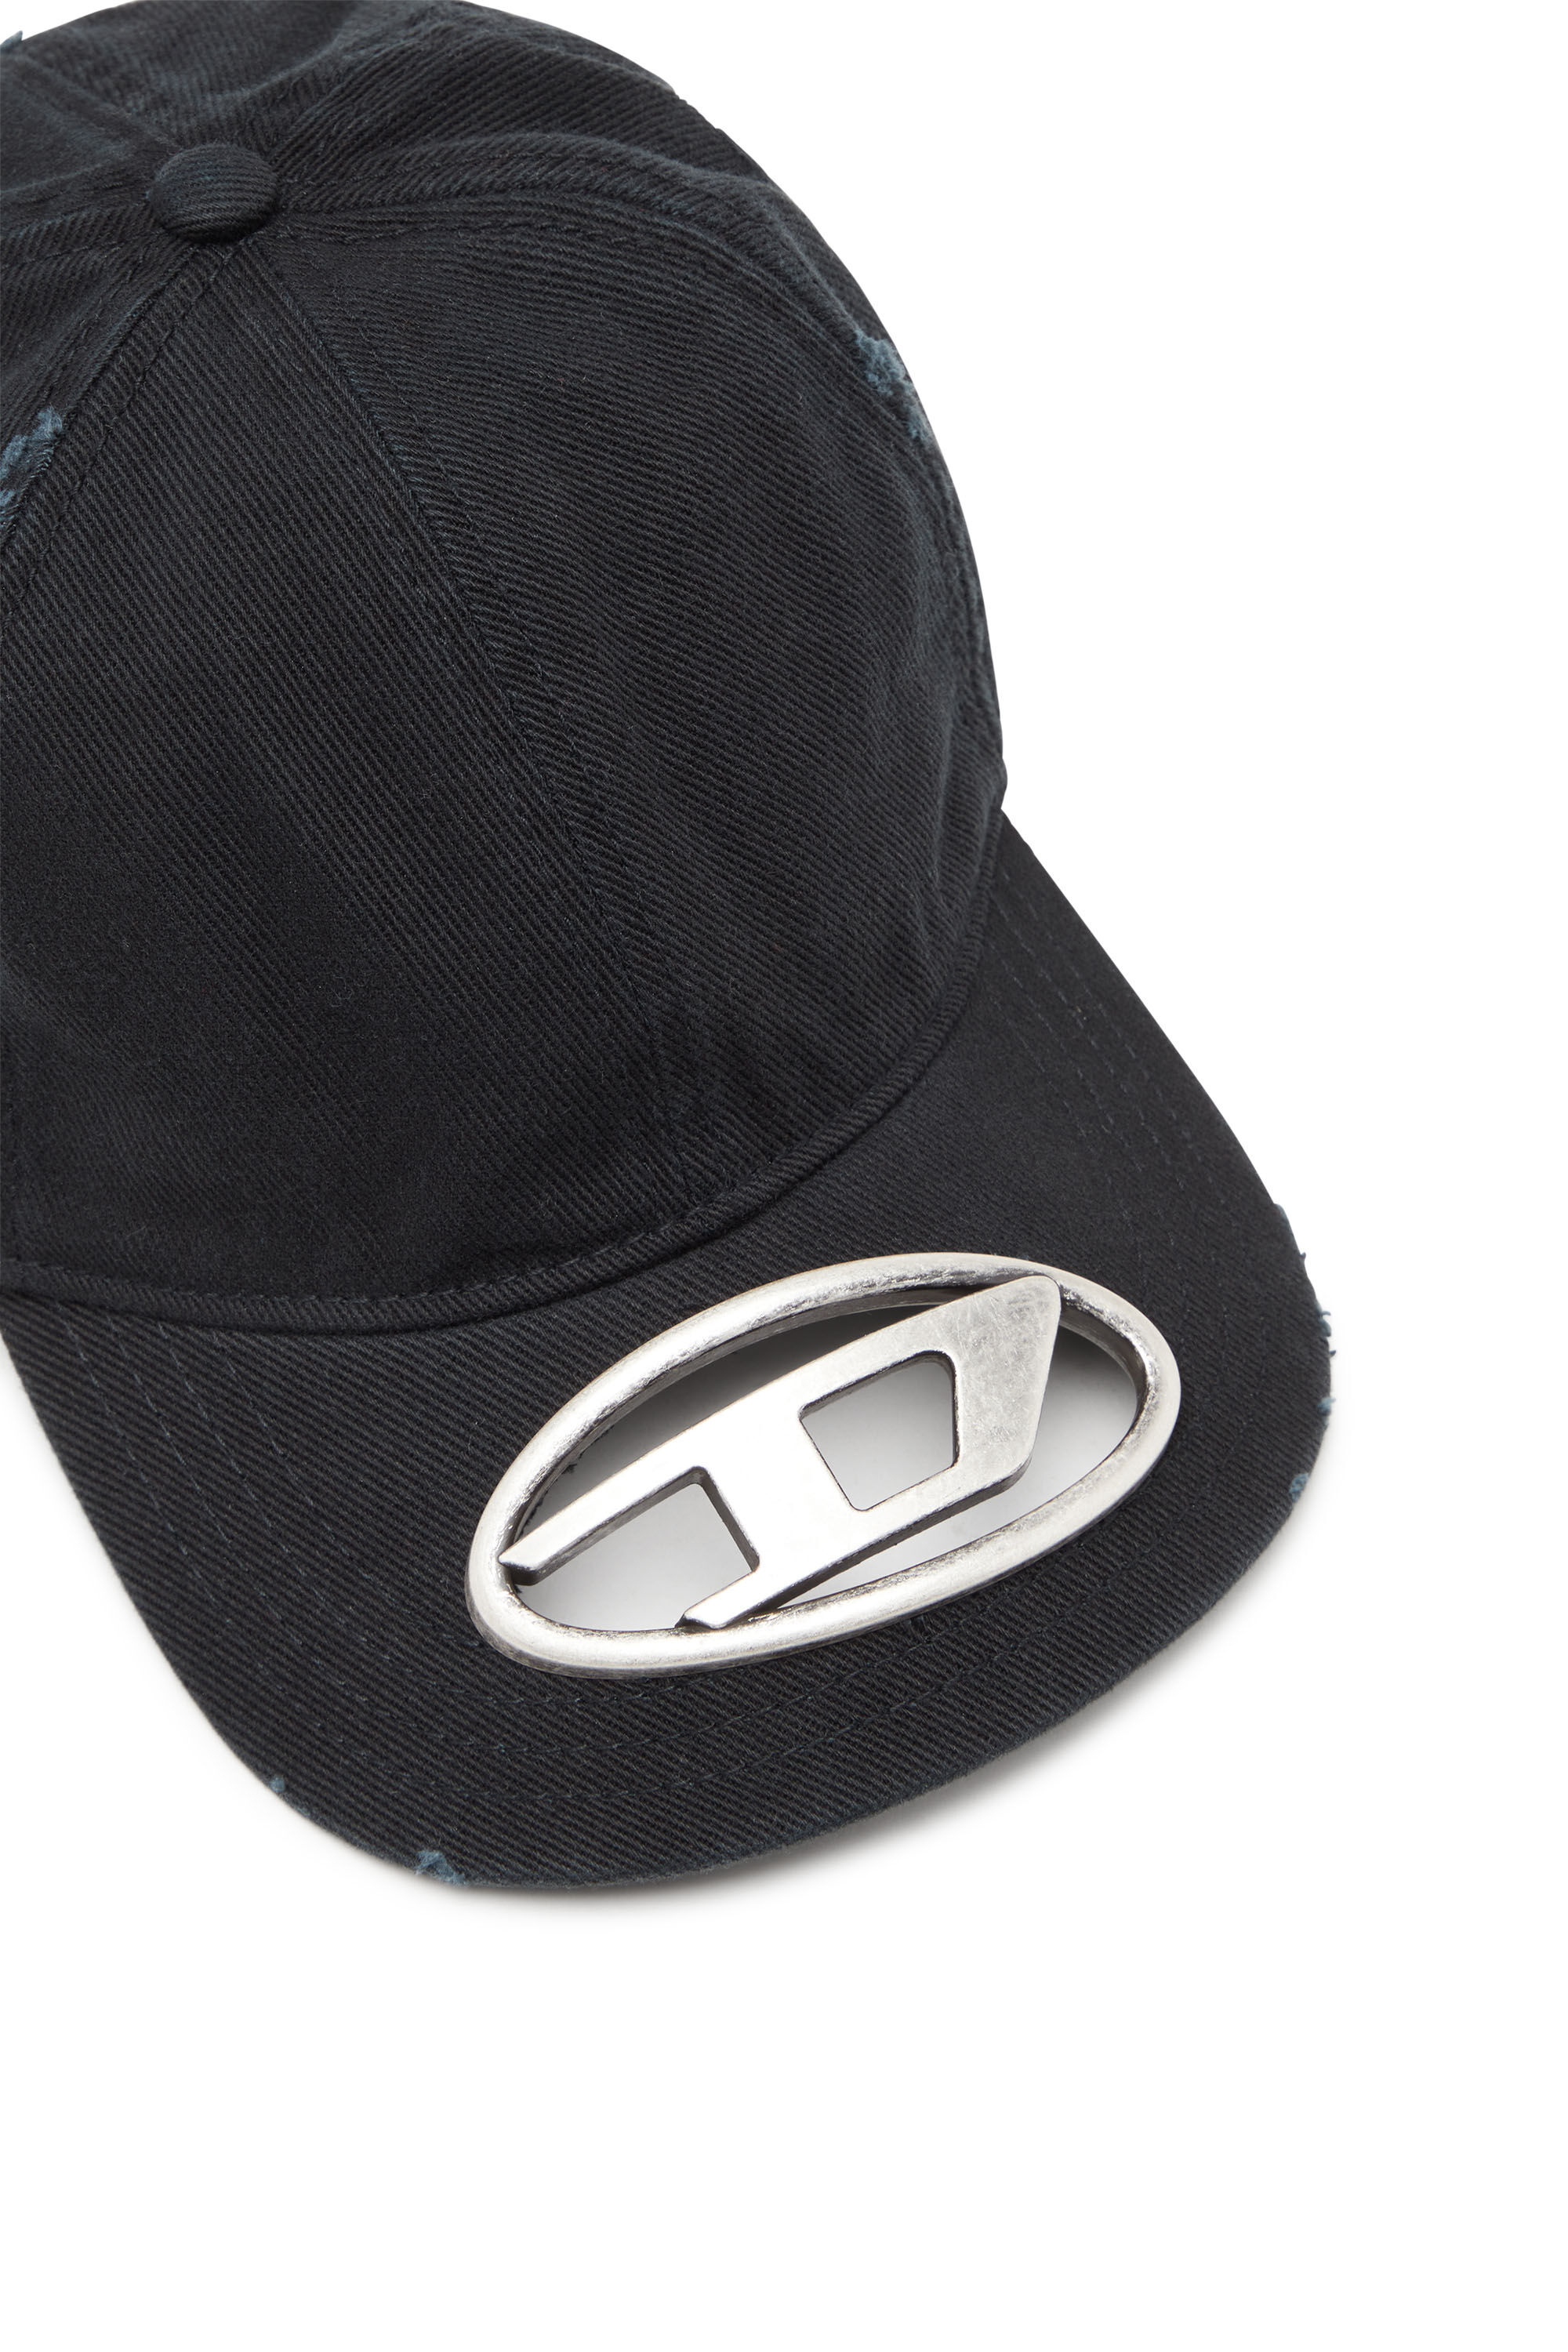 Men's Baseball cap with metal Oval D plaque | Diesel C-BEAST-A1